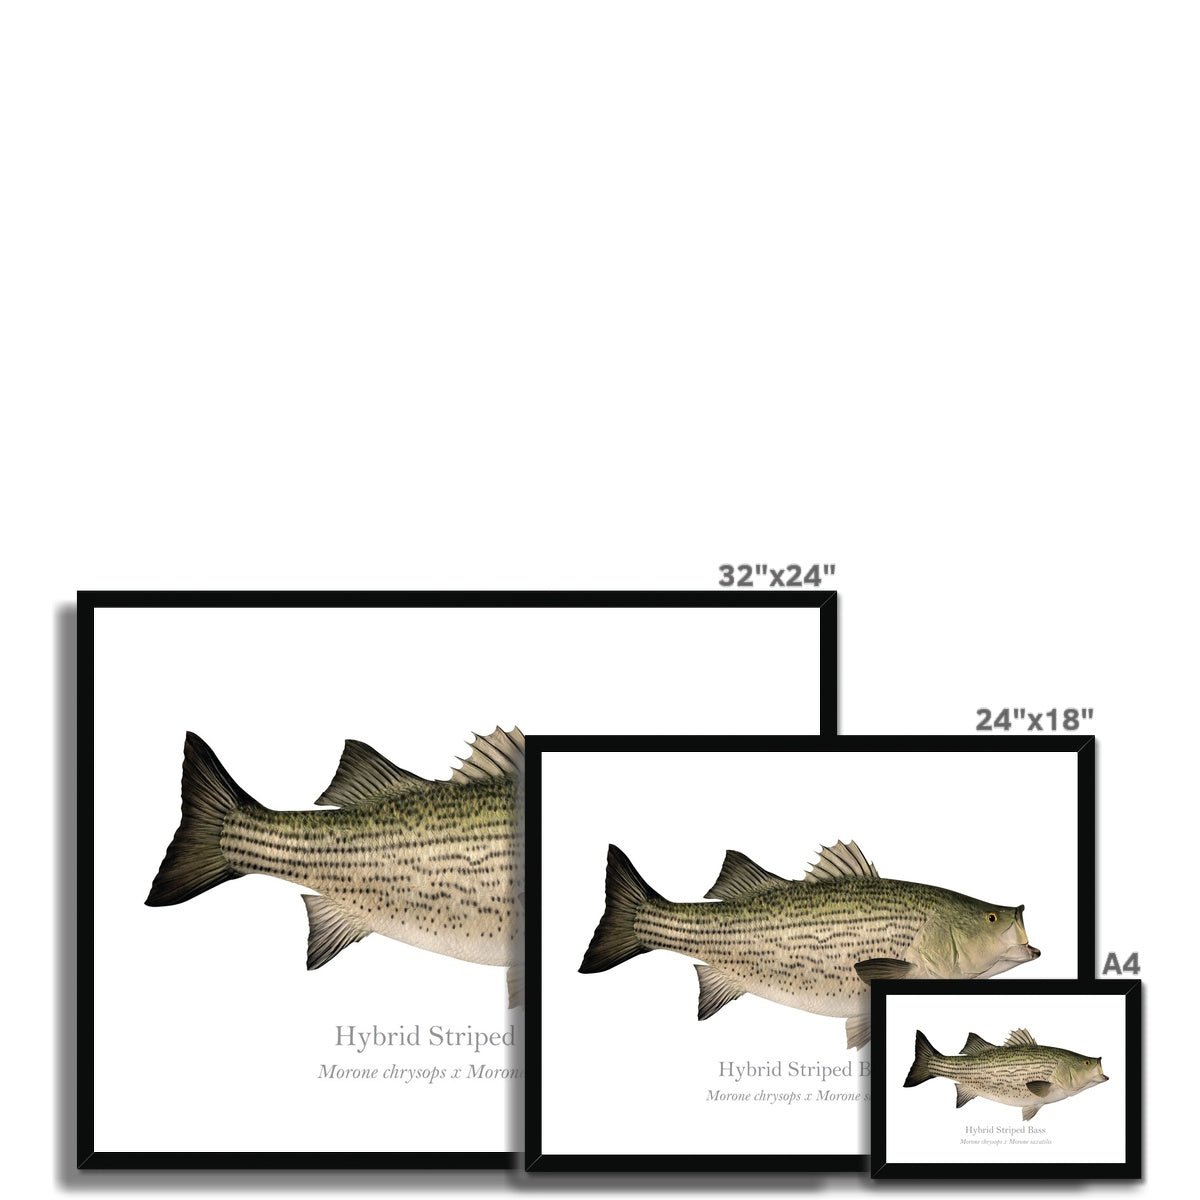 Hybrid Striped Bass - Framed Print - With Scientific Name - madfishlab.com